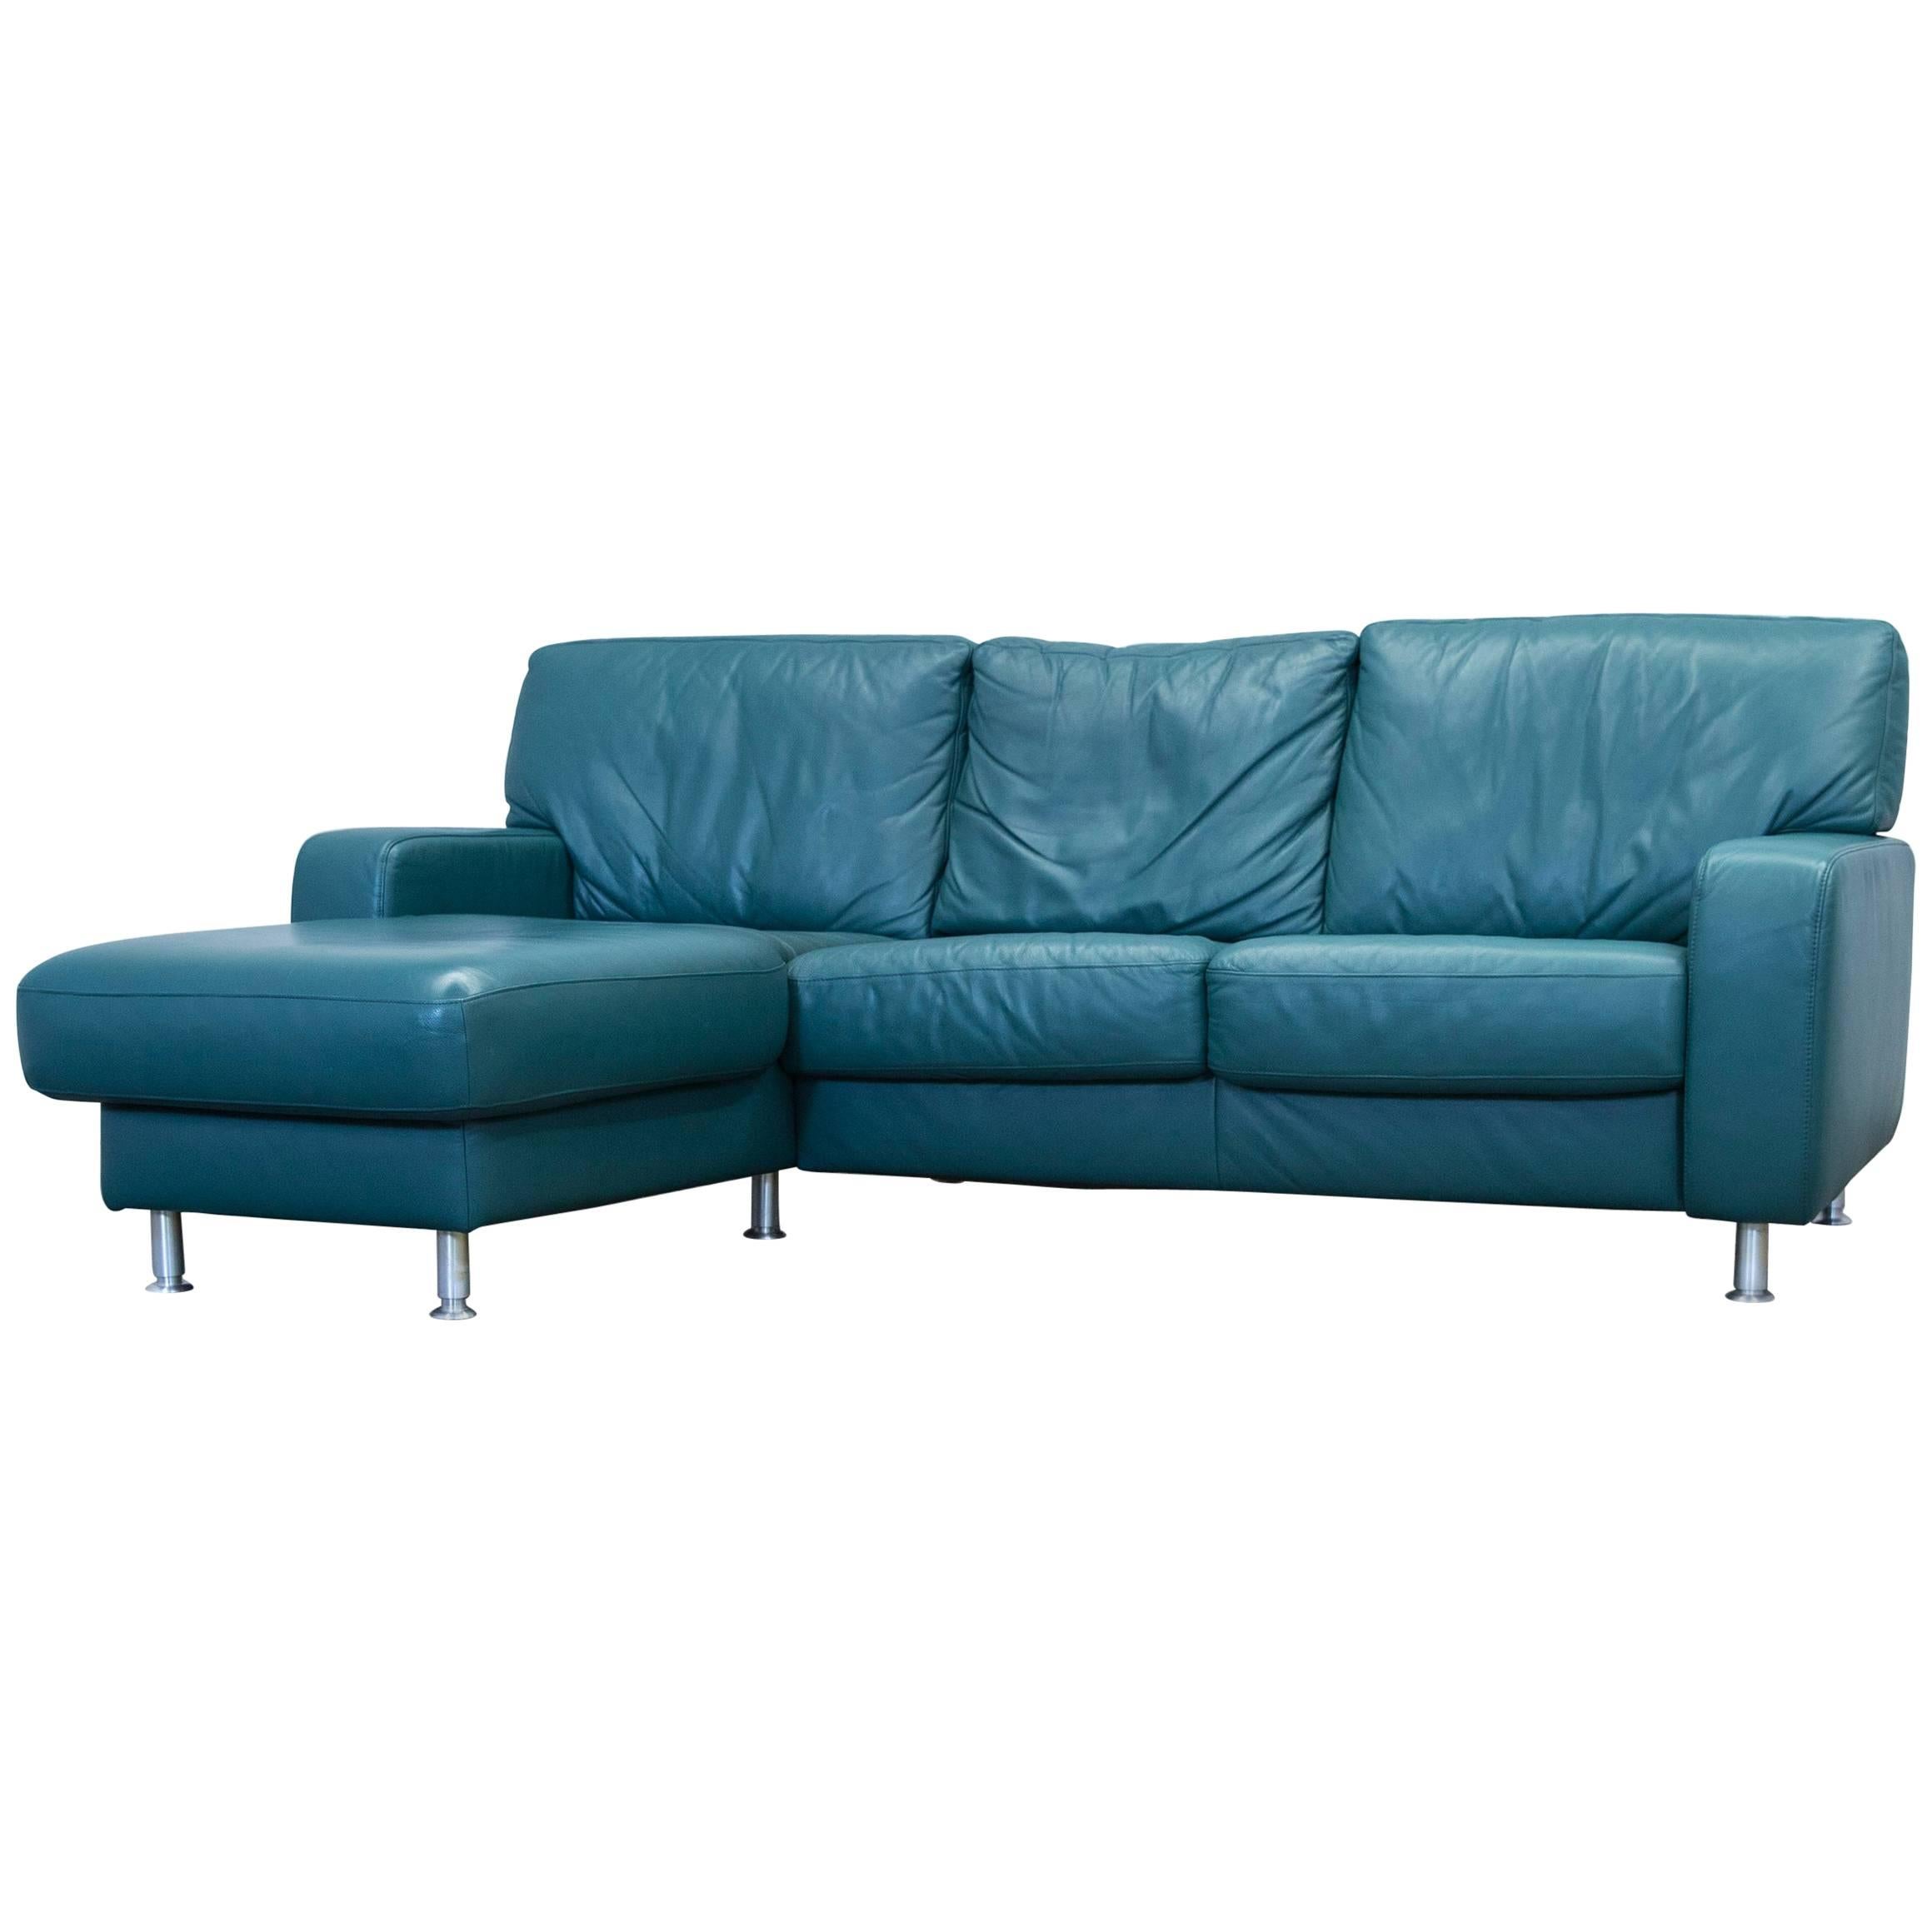 Koinor Designer Corner Sofa Leather Green Couch Modern